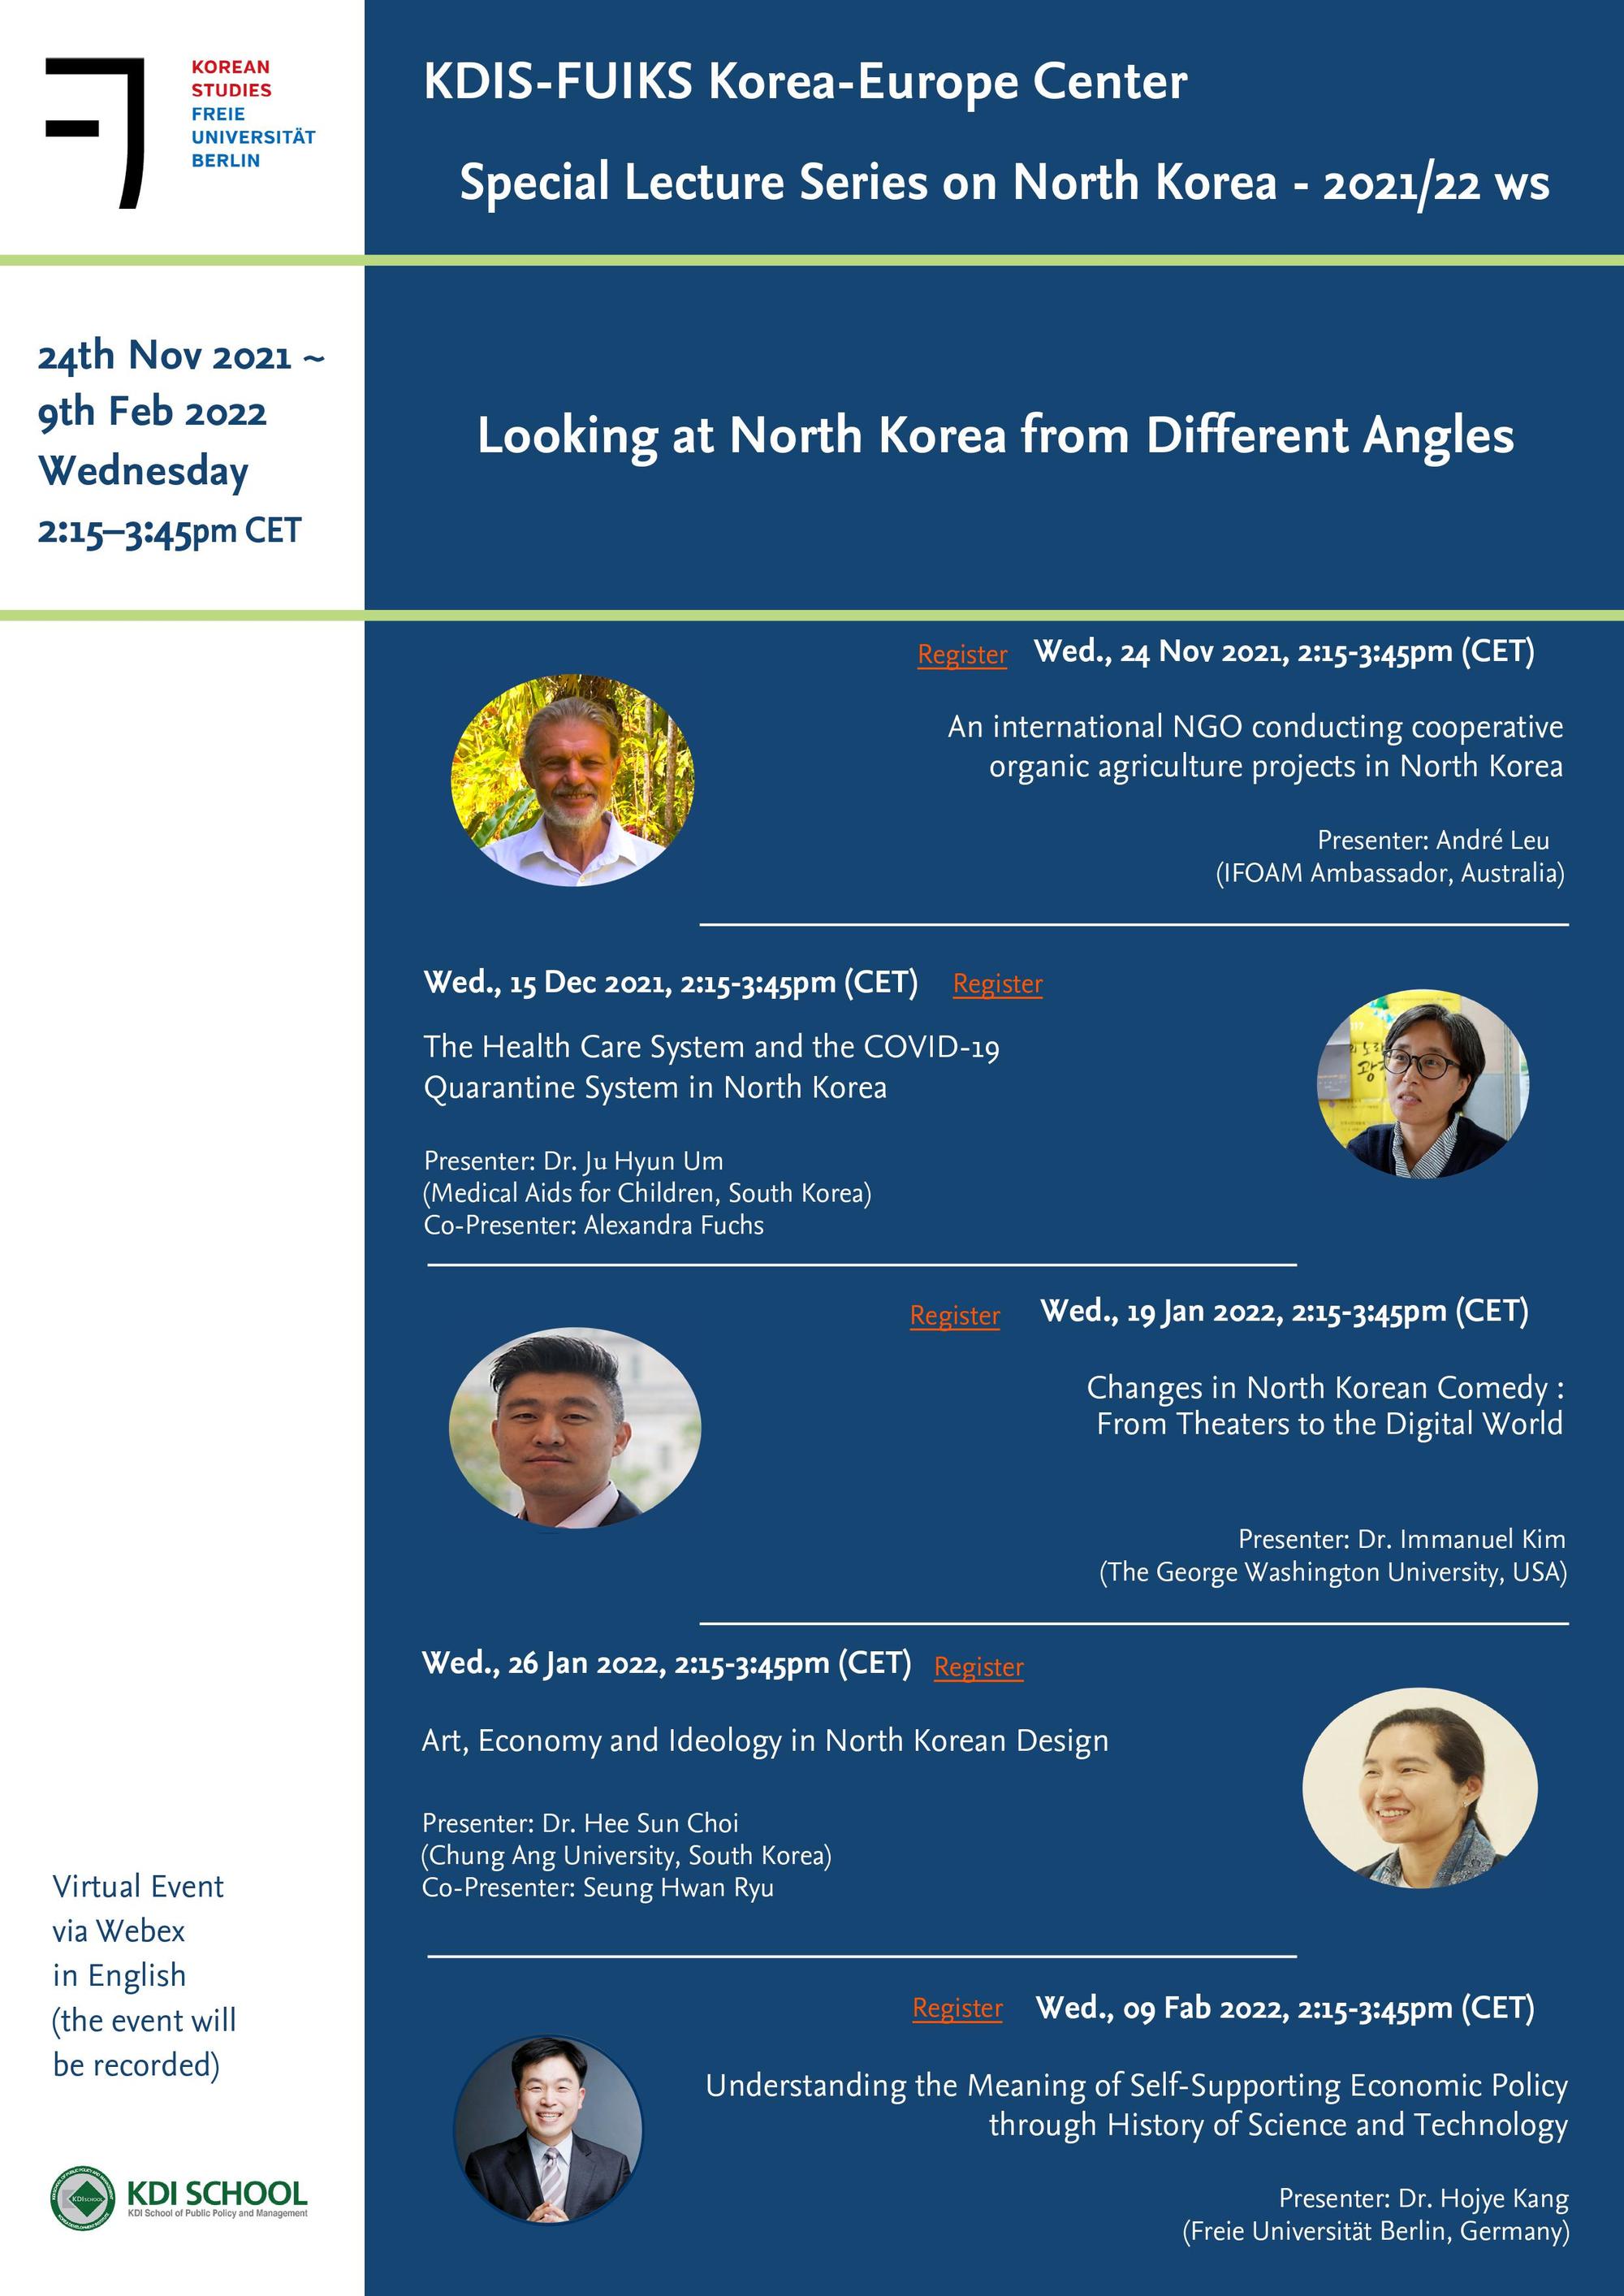 KDIS-FUIKS Korea-Europe Center - Special Lecture Series on North Korea 2021/22